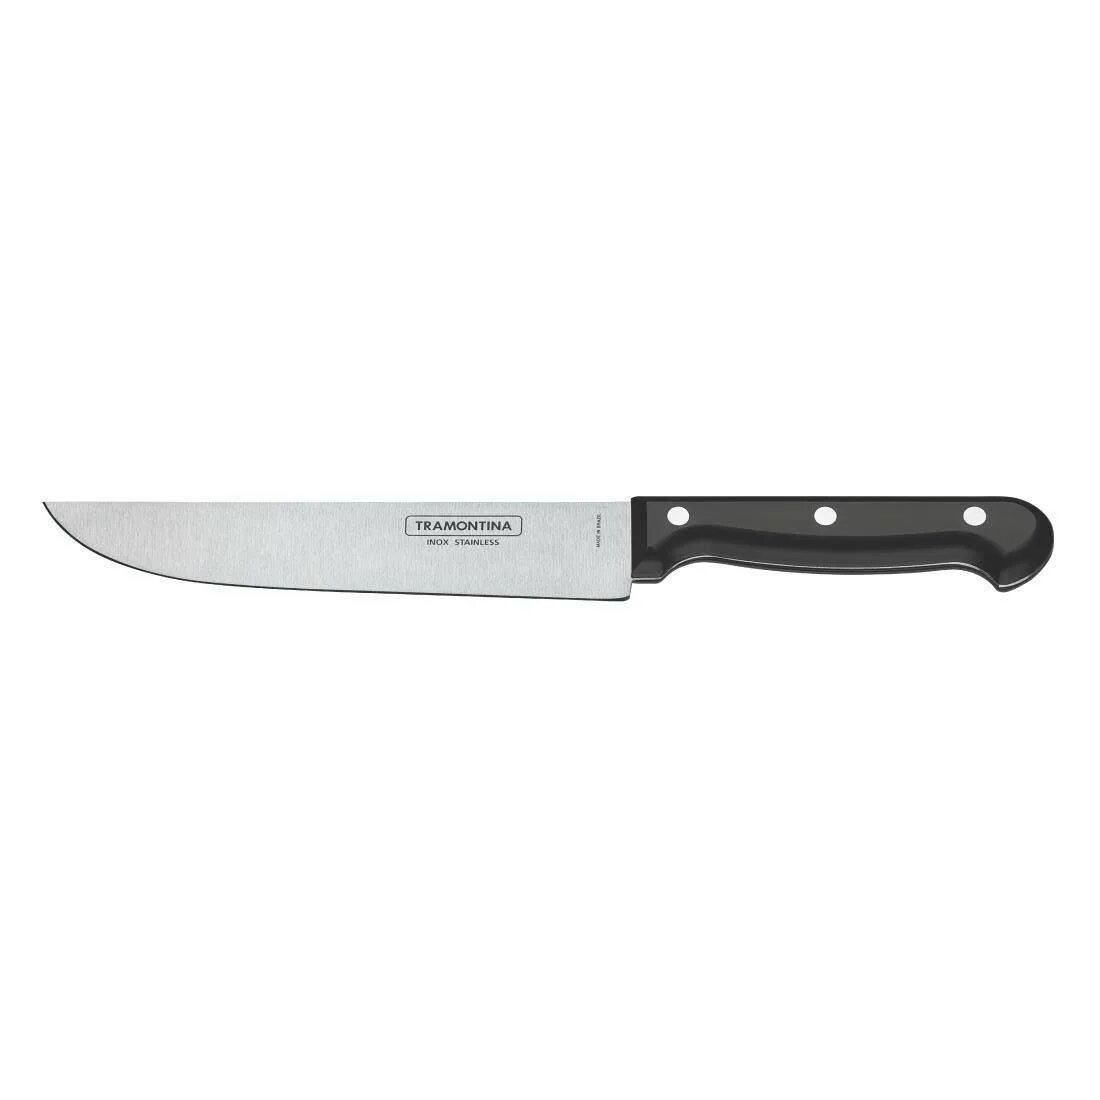 Нож 5 см лезвие. Ножи Трамонтина УЛЬТРАКОРТ. Нож кухонный Tramontina Ultracorte 17,5см. Нож Ultracorte кухонный 17,5 см Tramontina 23857/107-tr. Fackelmann нож поварской Nirosta.